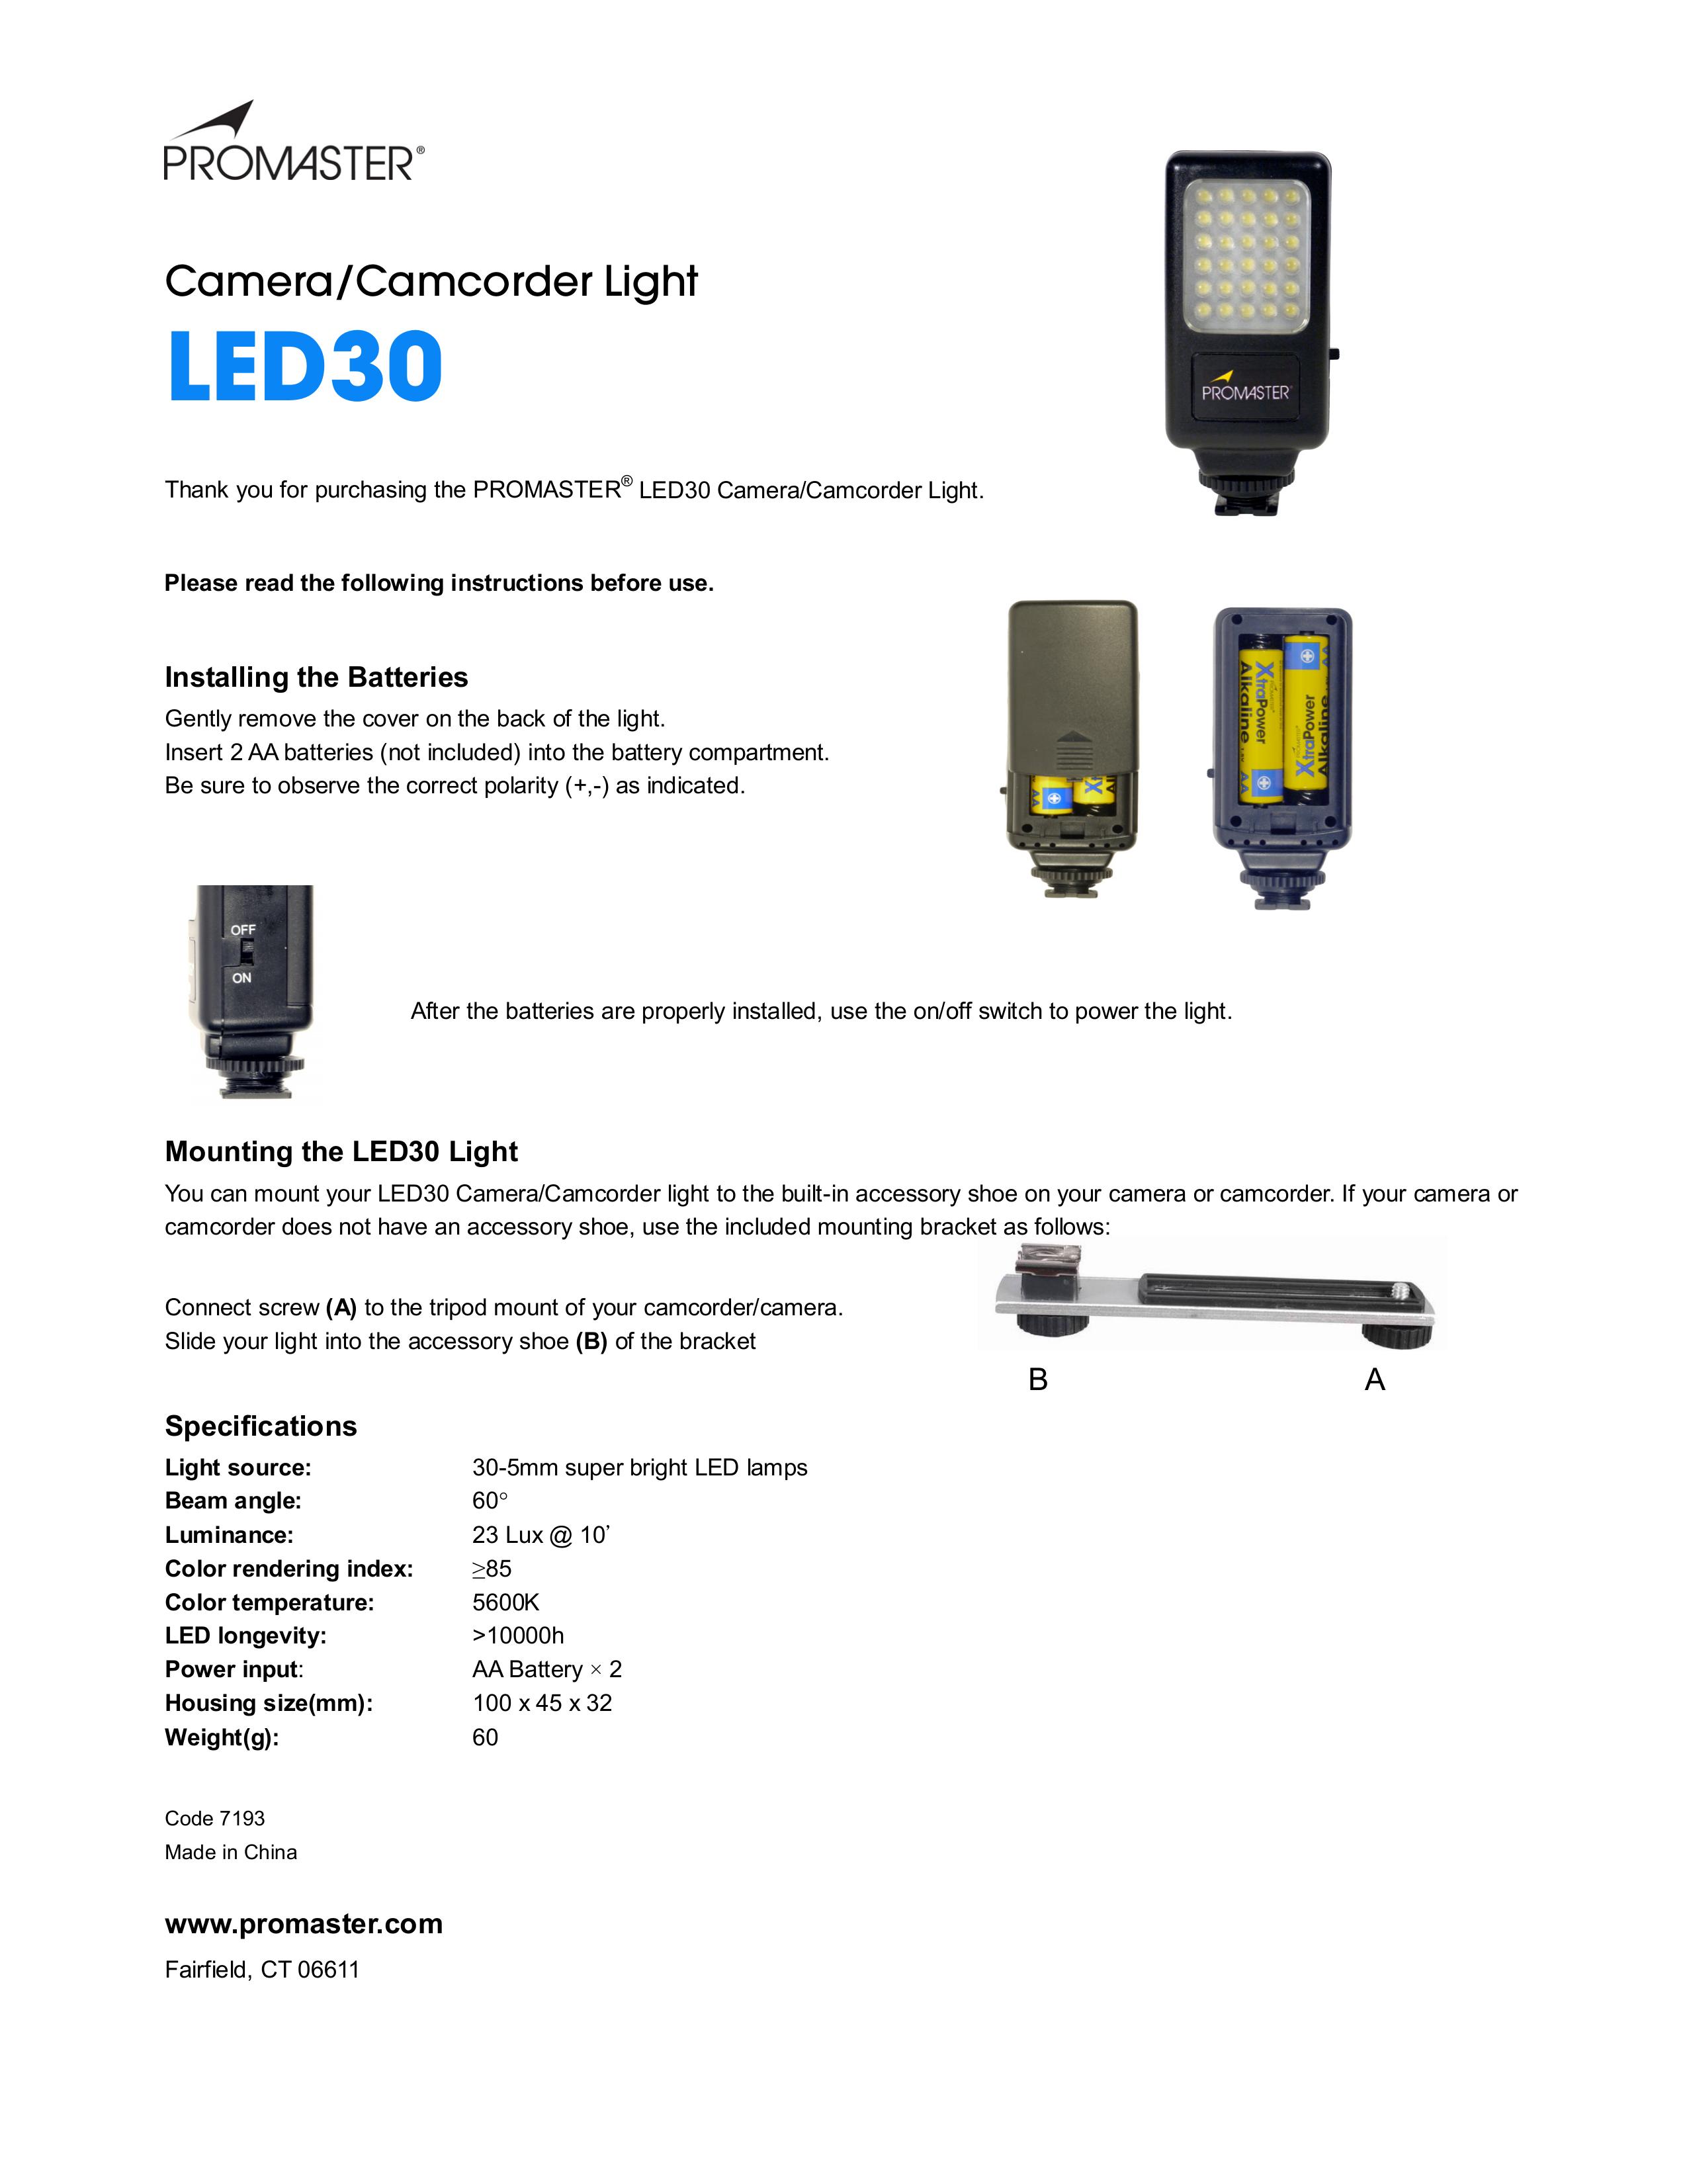 ProMaster LED30 Camcorder User Manual